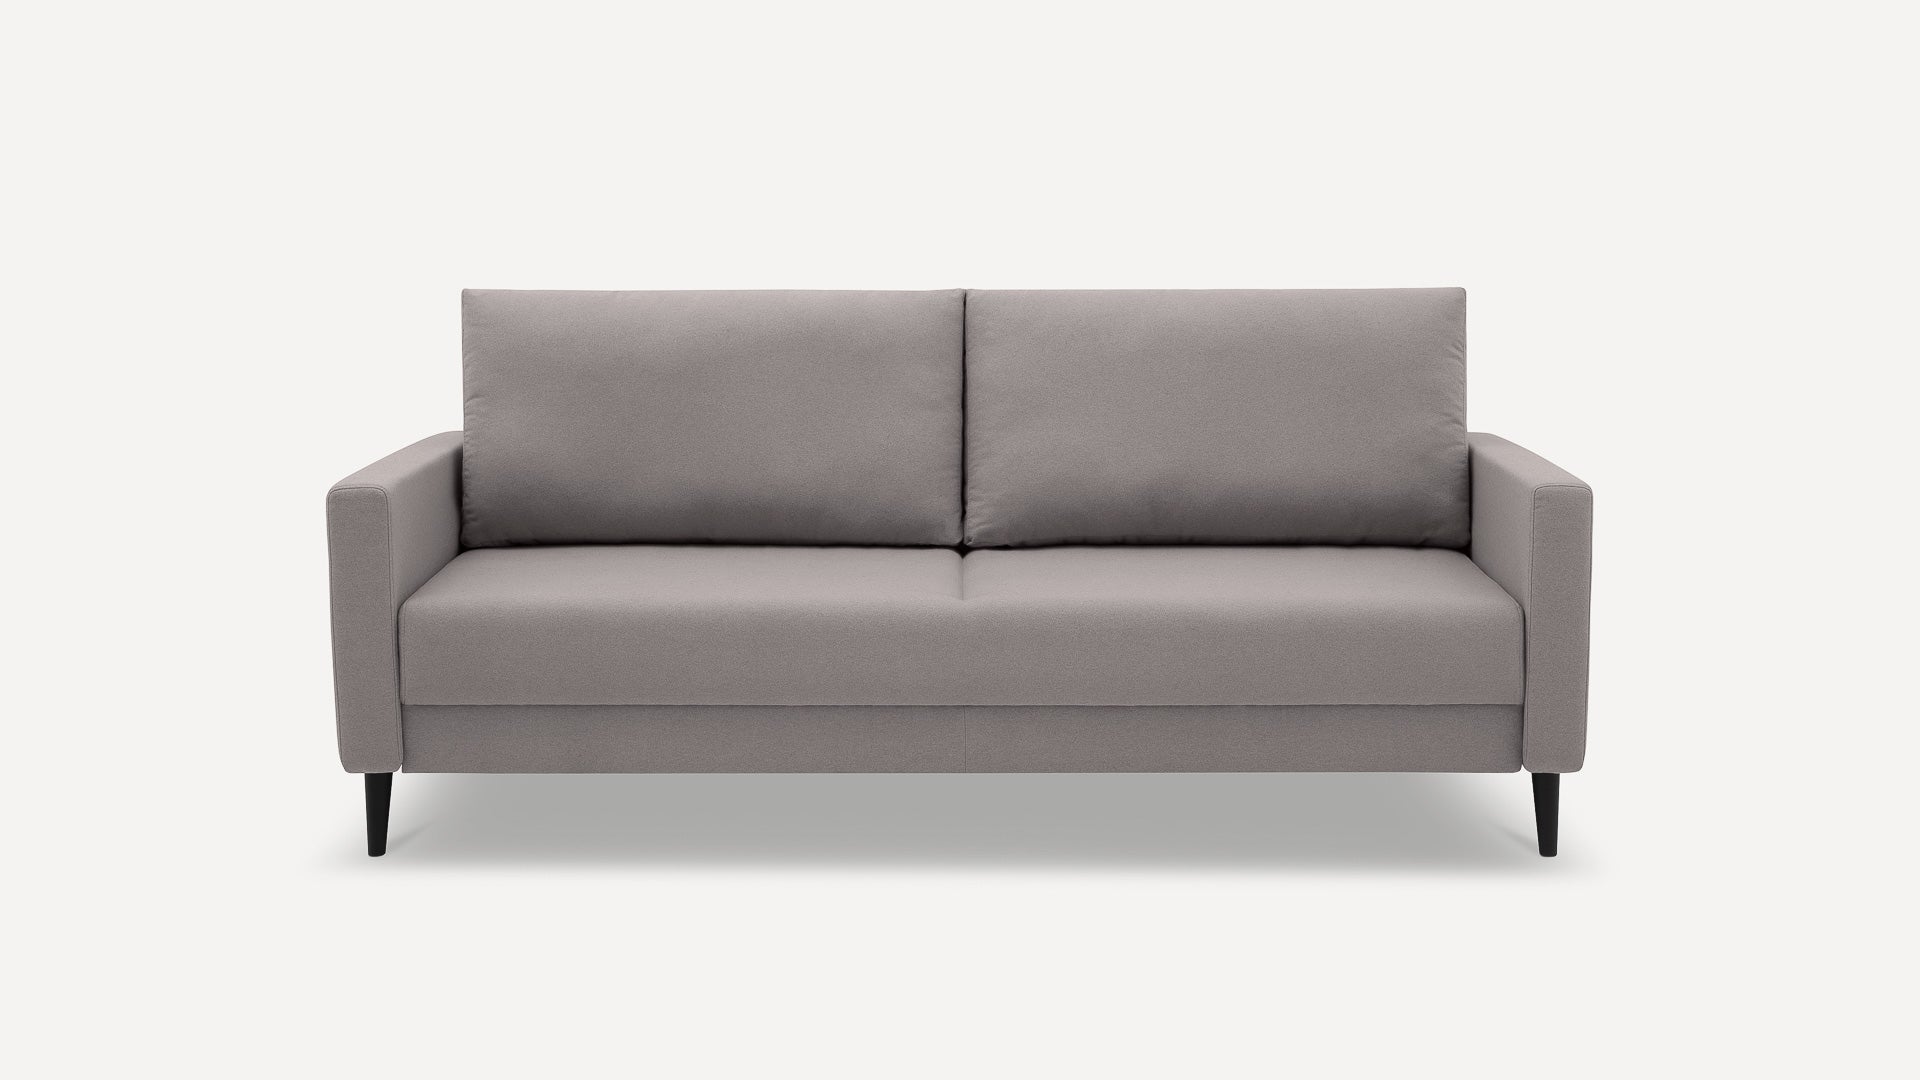 Sofa Benet noDL Flausz - Benet